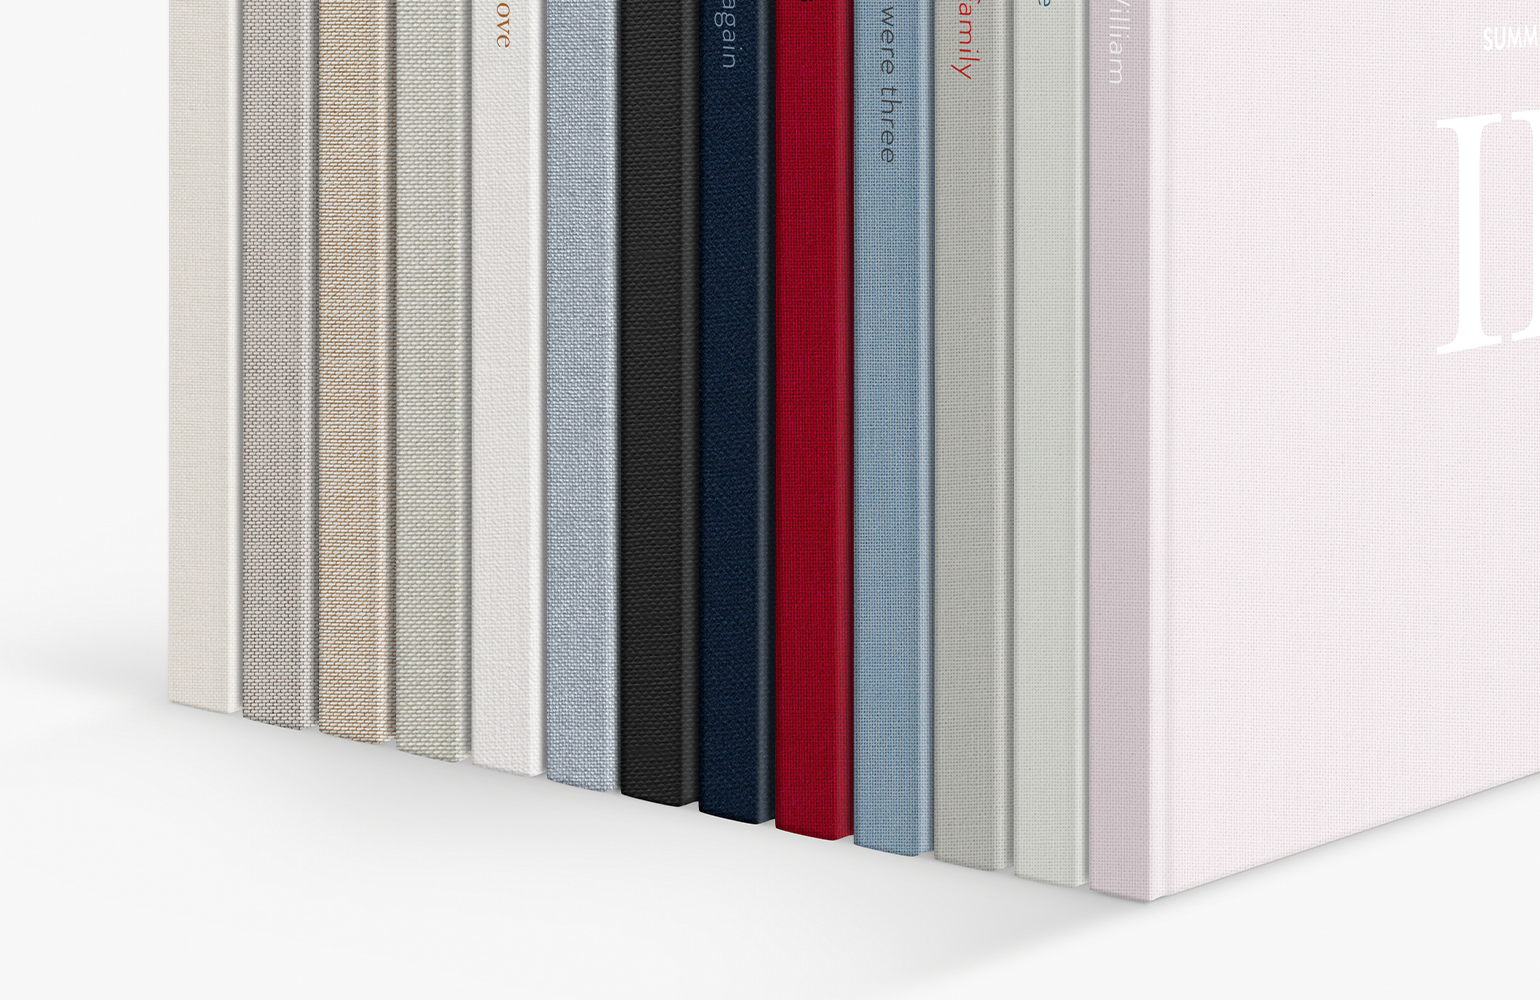 Standing row of photo book showcasing range of MILK fabric colors